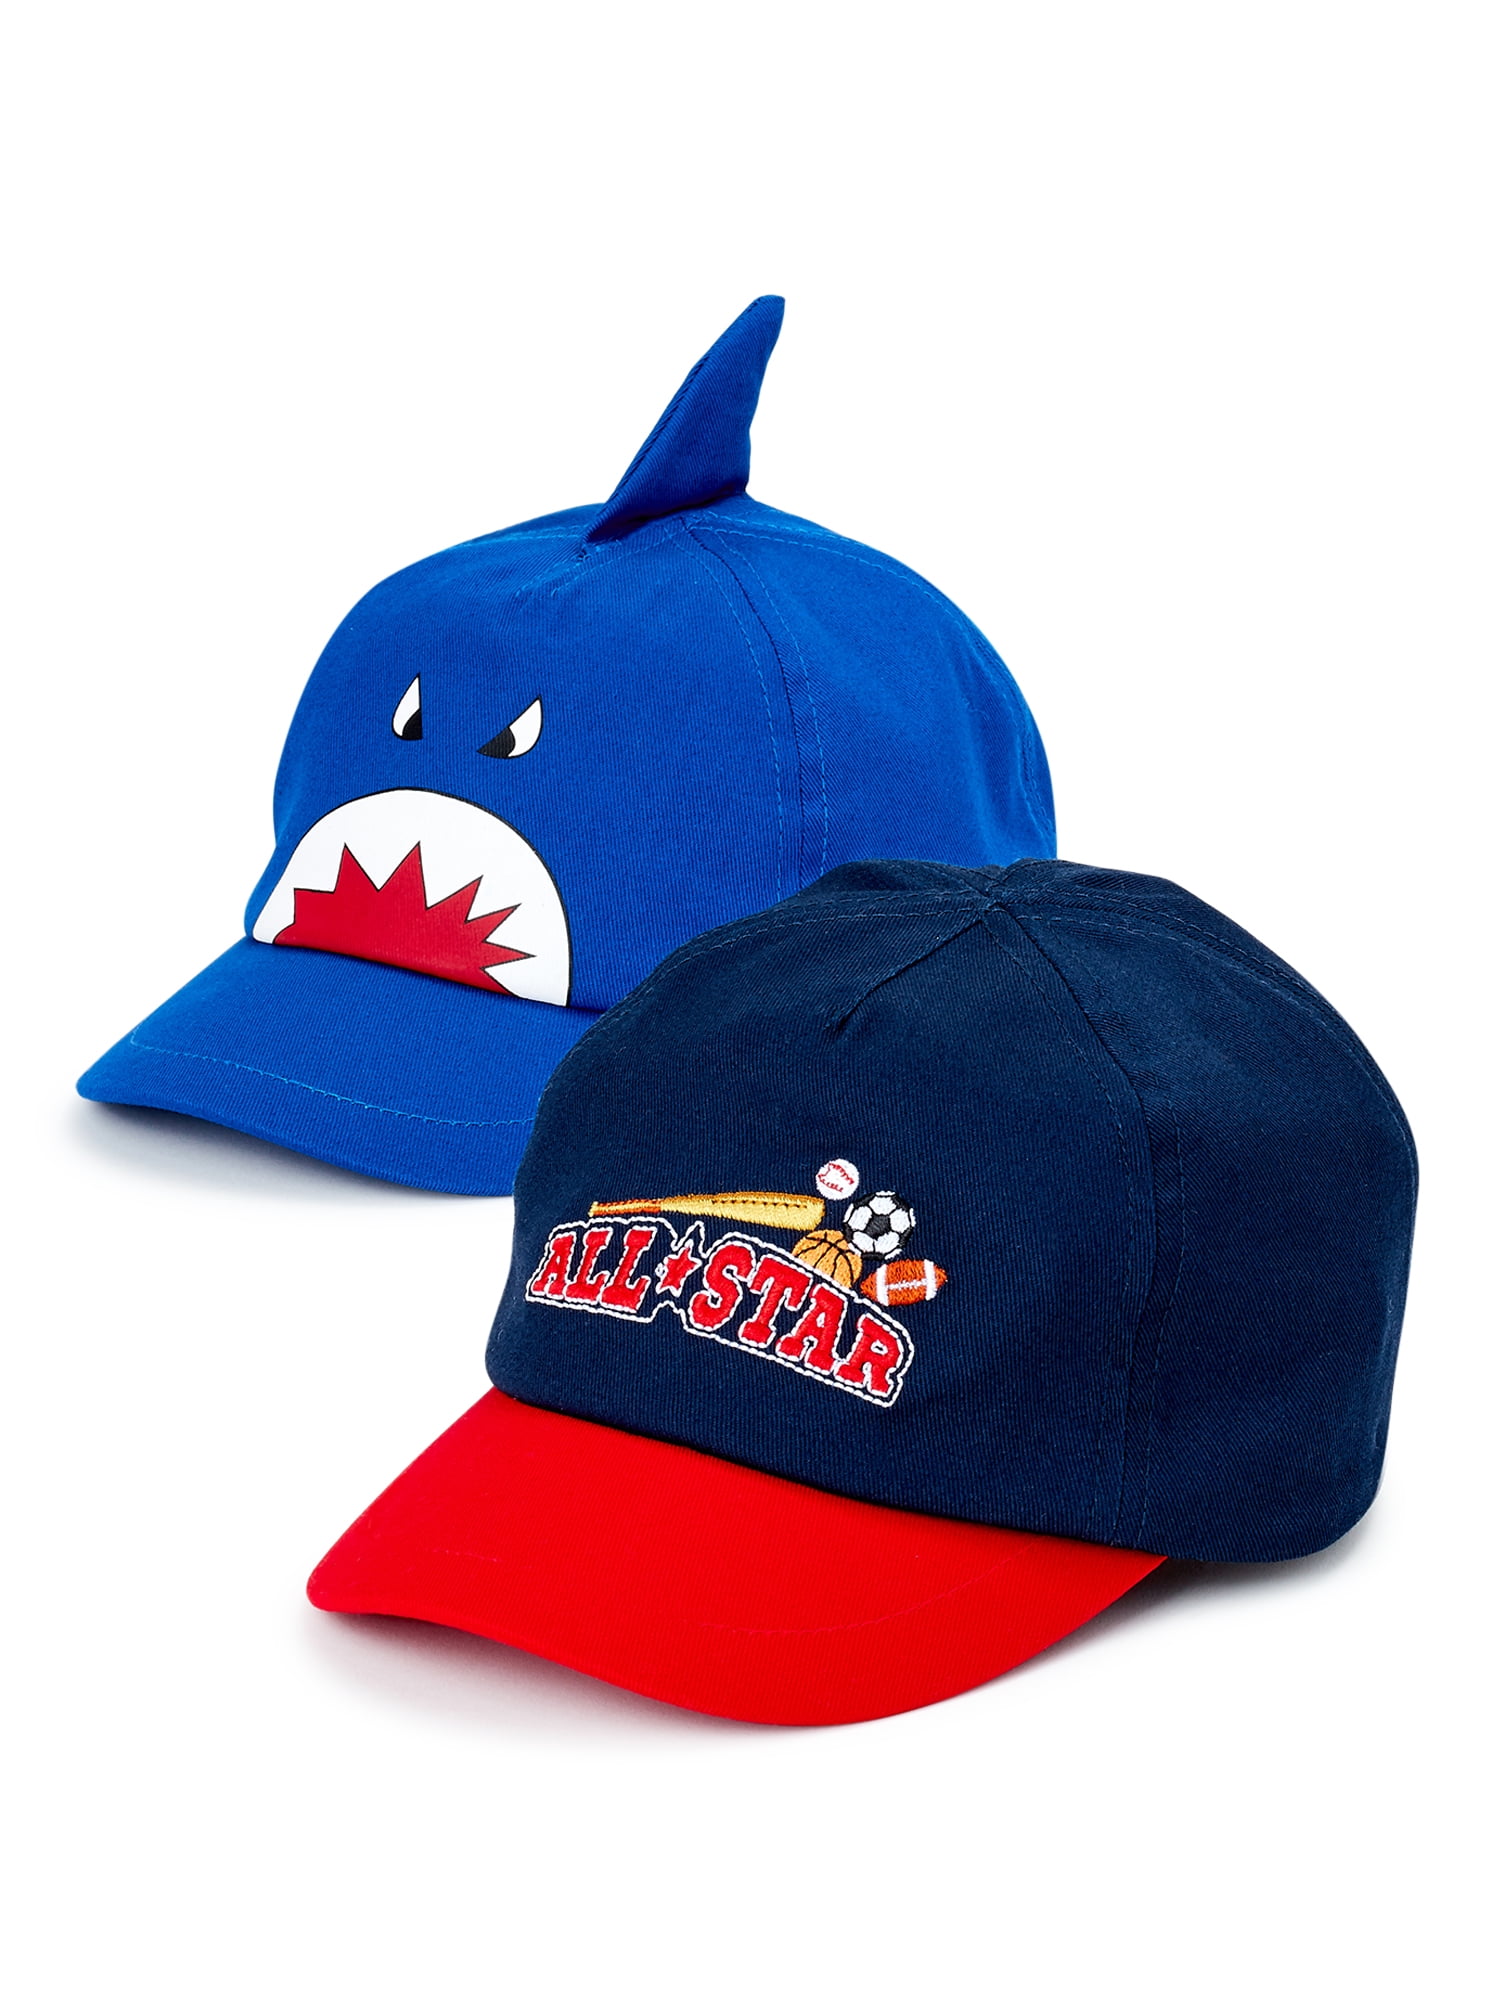 Boys ET4162 Disney Cars Baseball Cap Hat with Adjustable Back Size 3-8 Years 